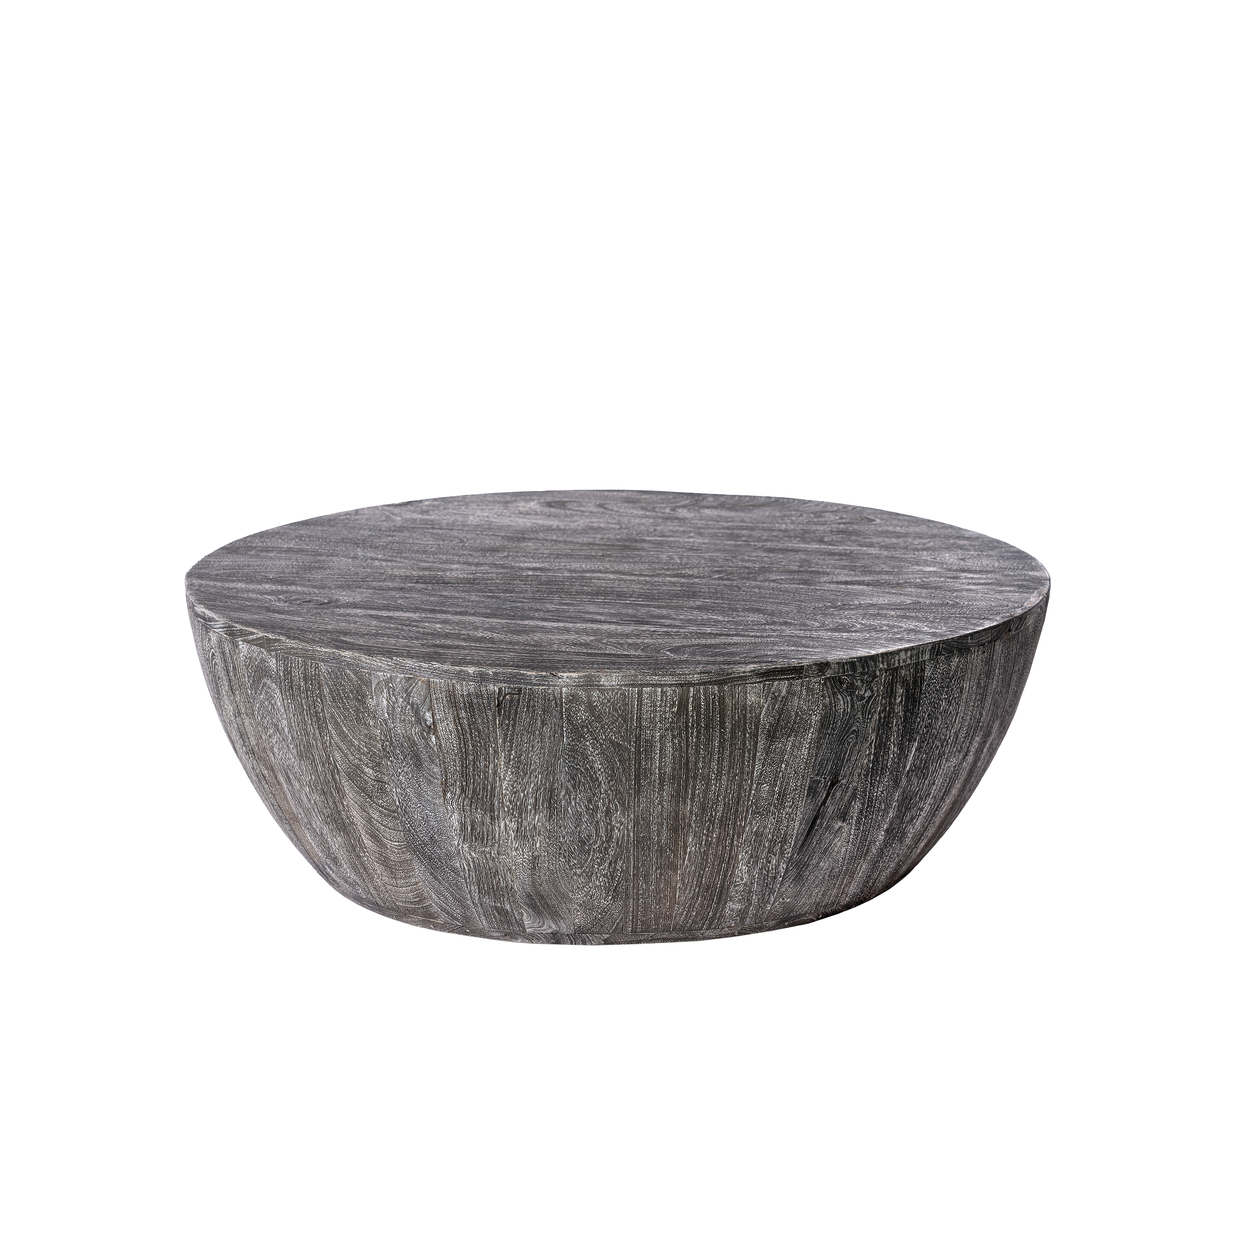 Arthur 36 Inch Farmhouse Style Handcrafted Mango Wood Coffee Table, Round Drum Shape, Sandblasted Black- Saltoro Sherpi